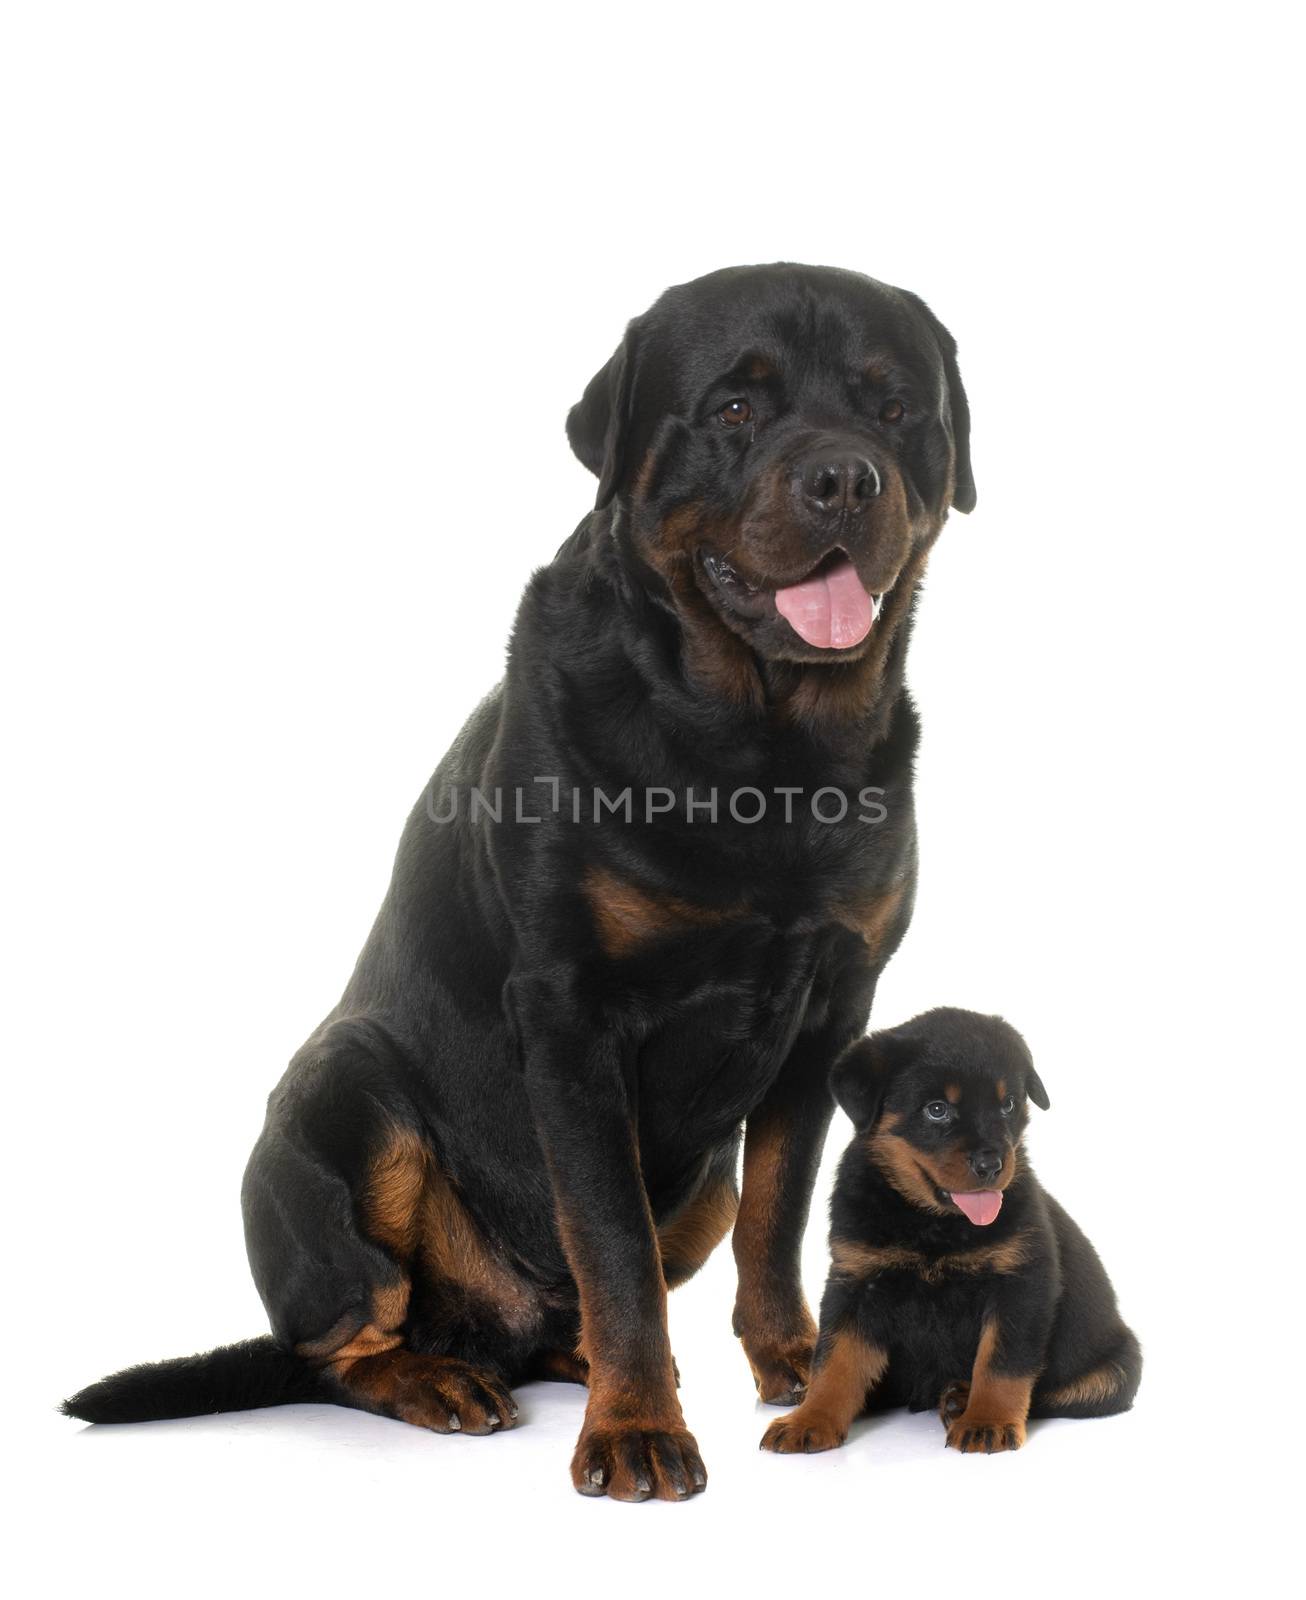 adult and puppy rottweiler by cynoclub